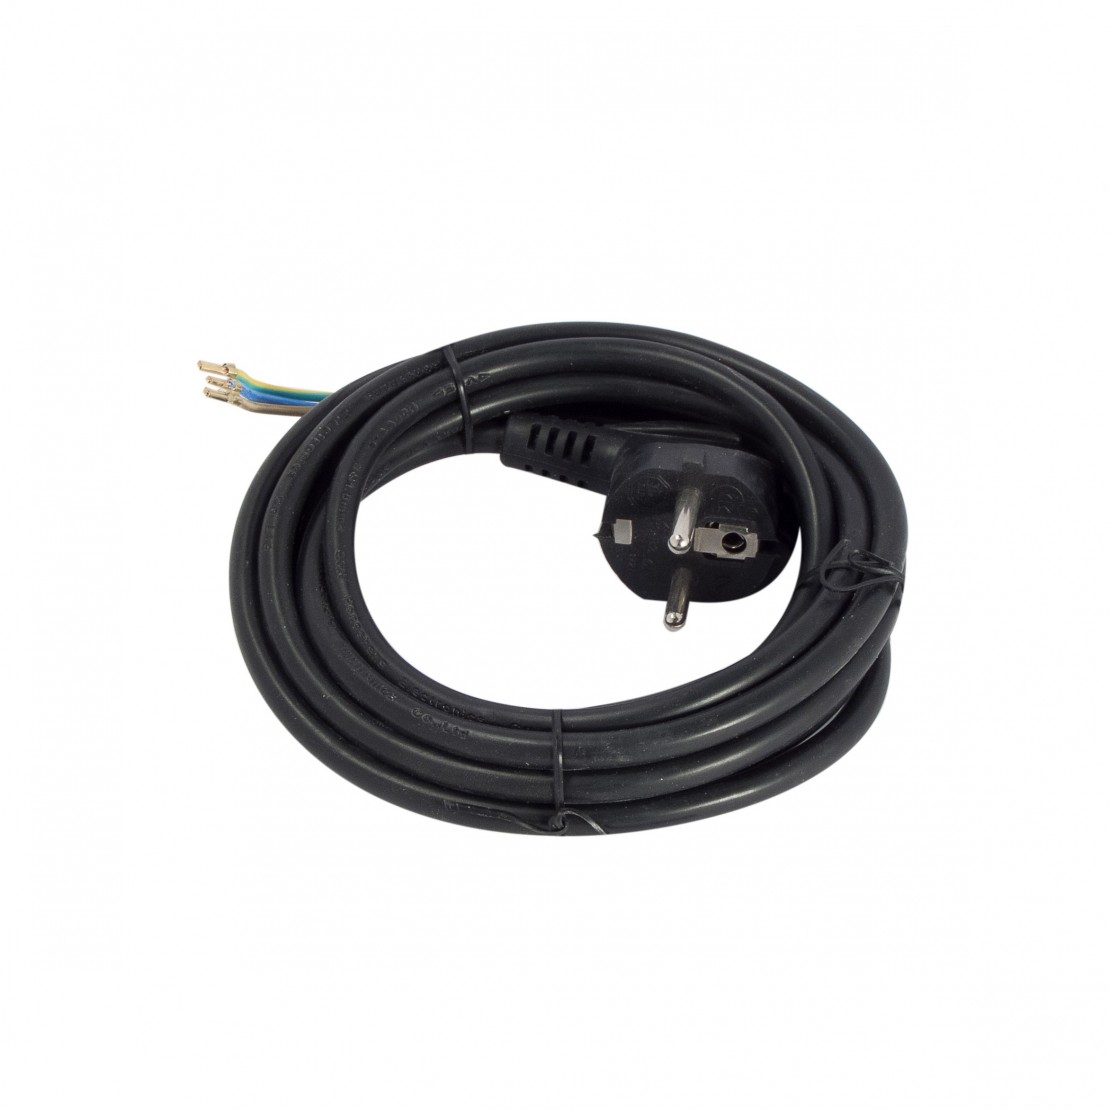 Cable HO5VVF - 1,5m - 3x1,5mm2- Marrón(SCH)